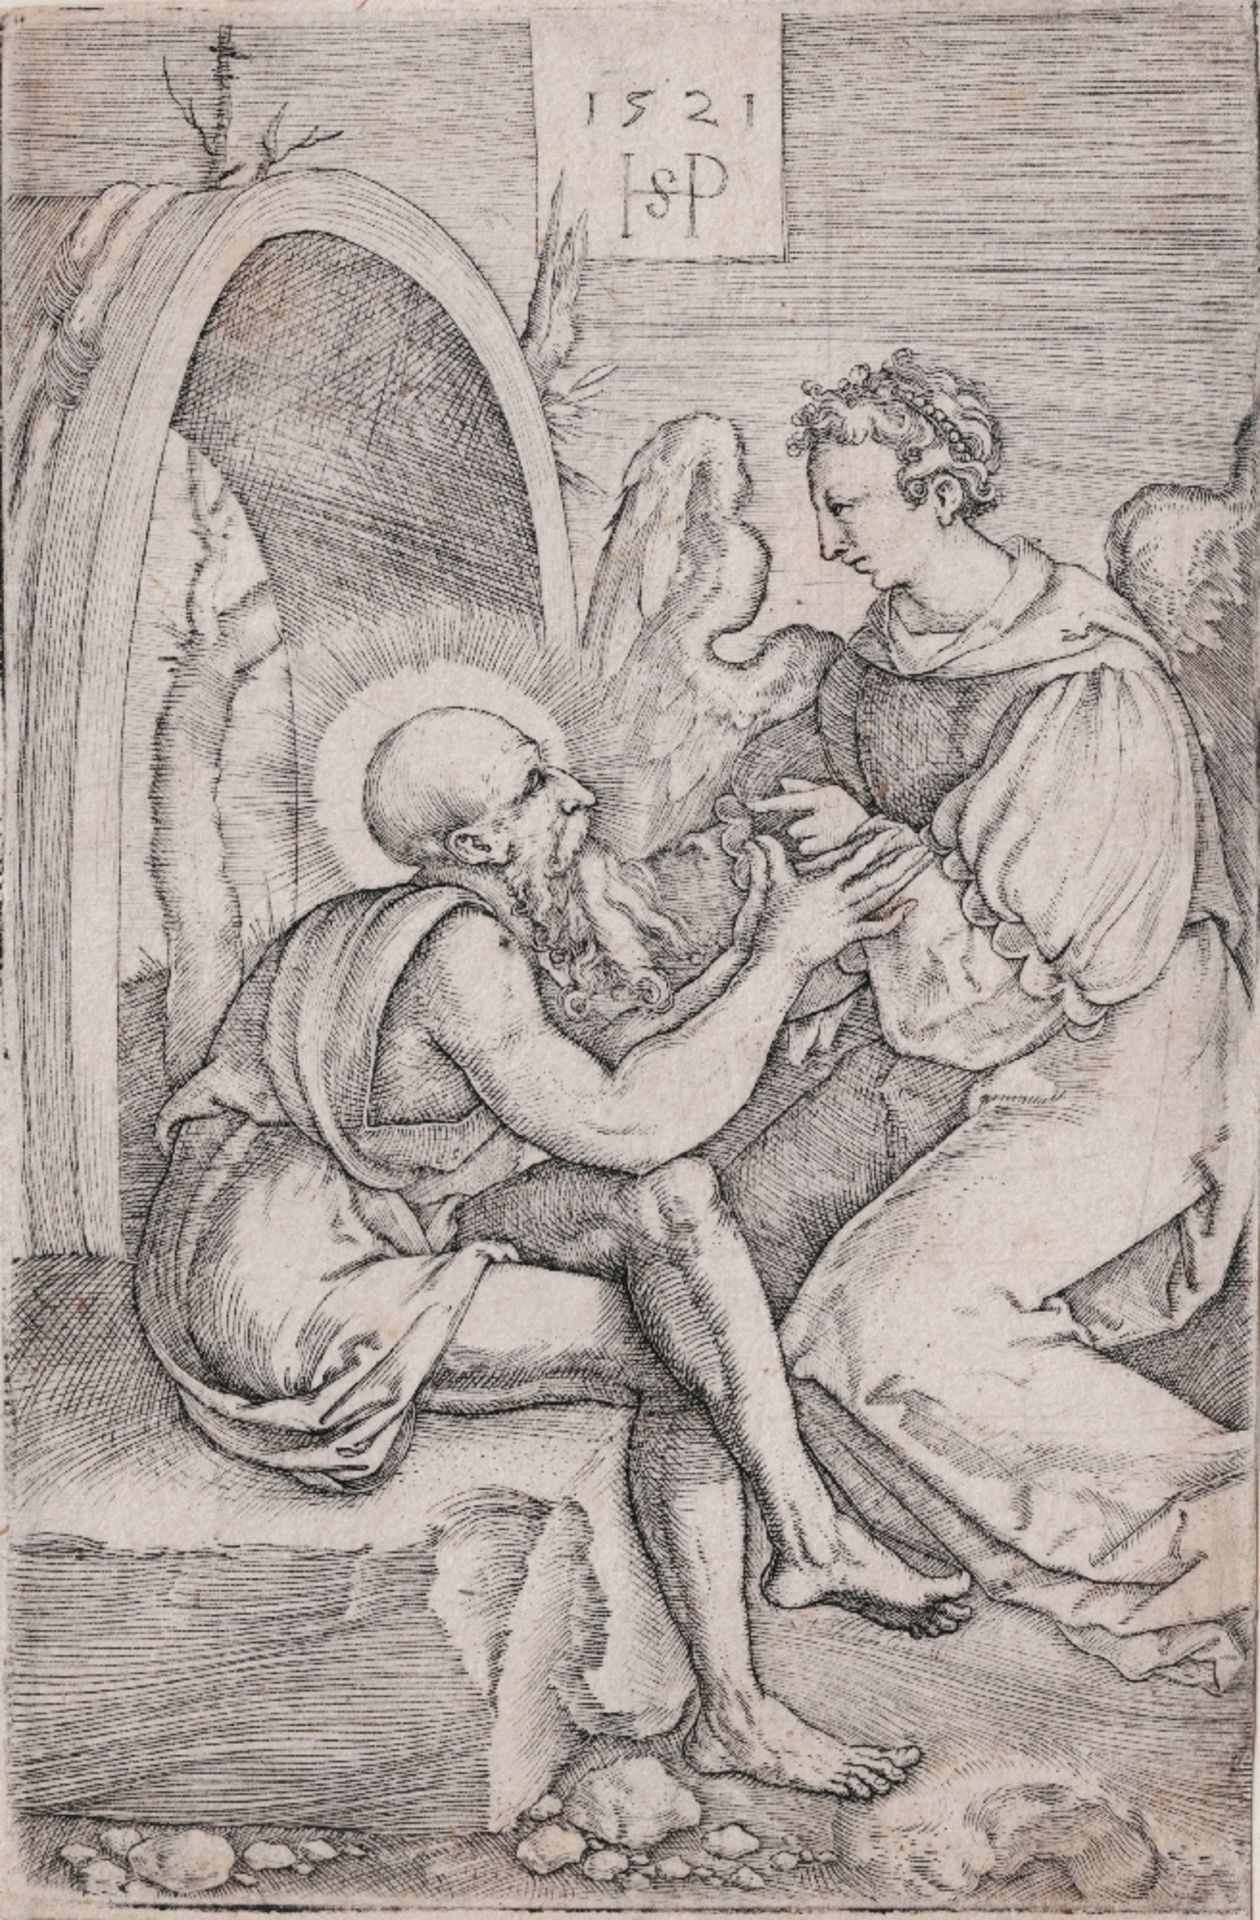 Hans Sebald Beham (1500-1550) - Saint Jerome with the angel